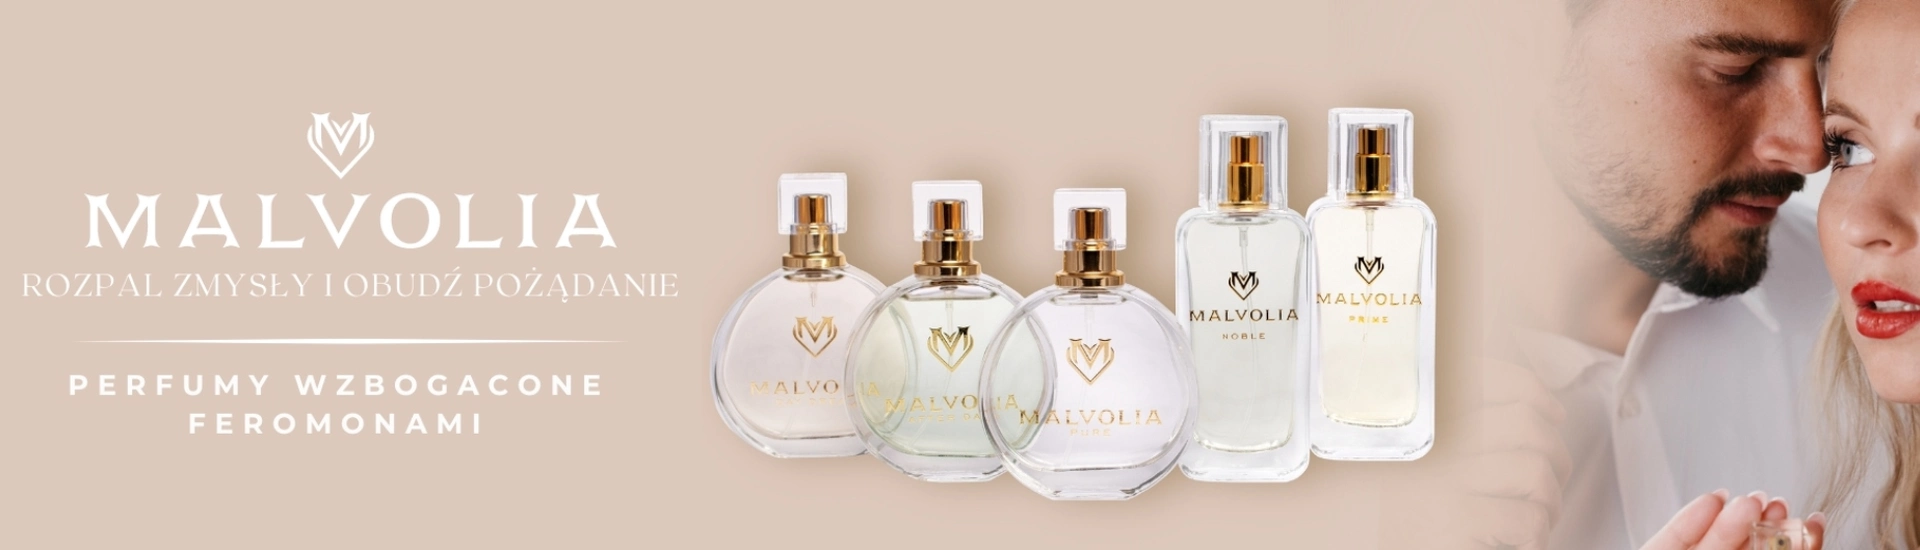 Malvolia Perfumy